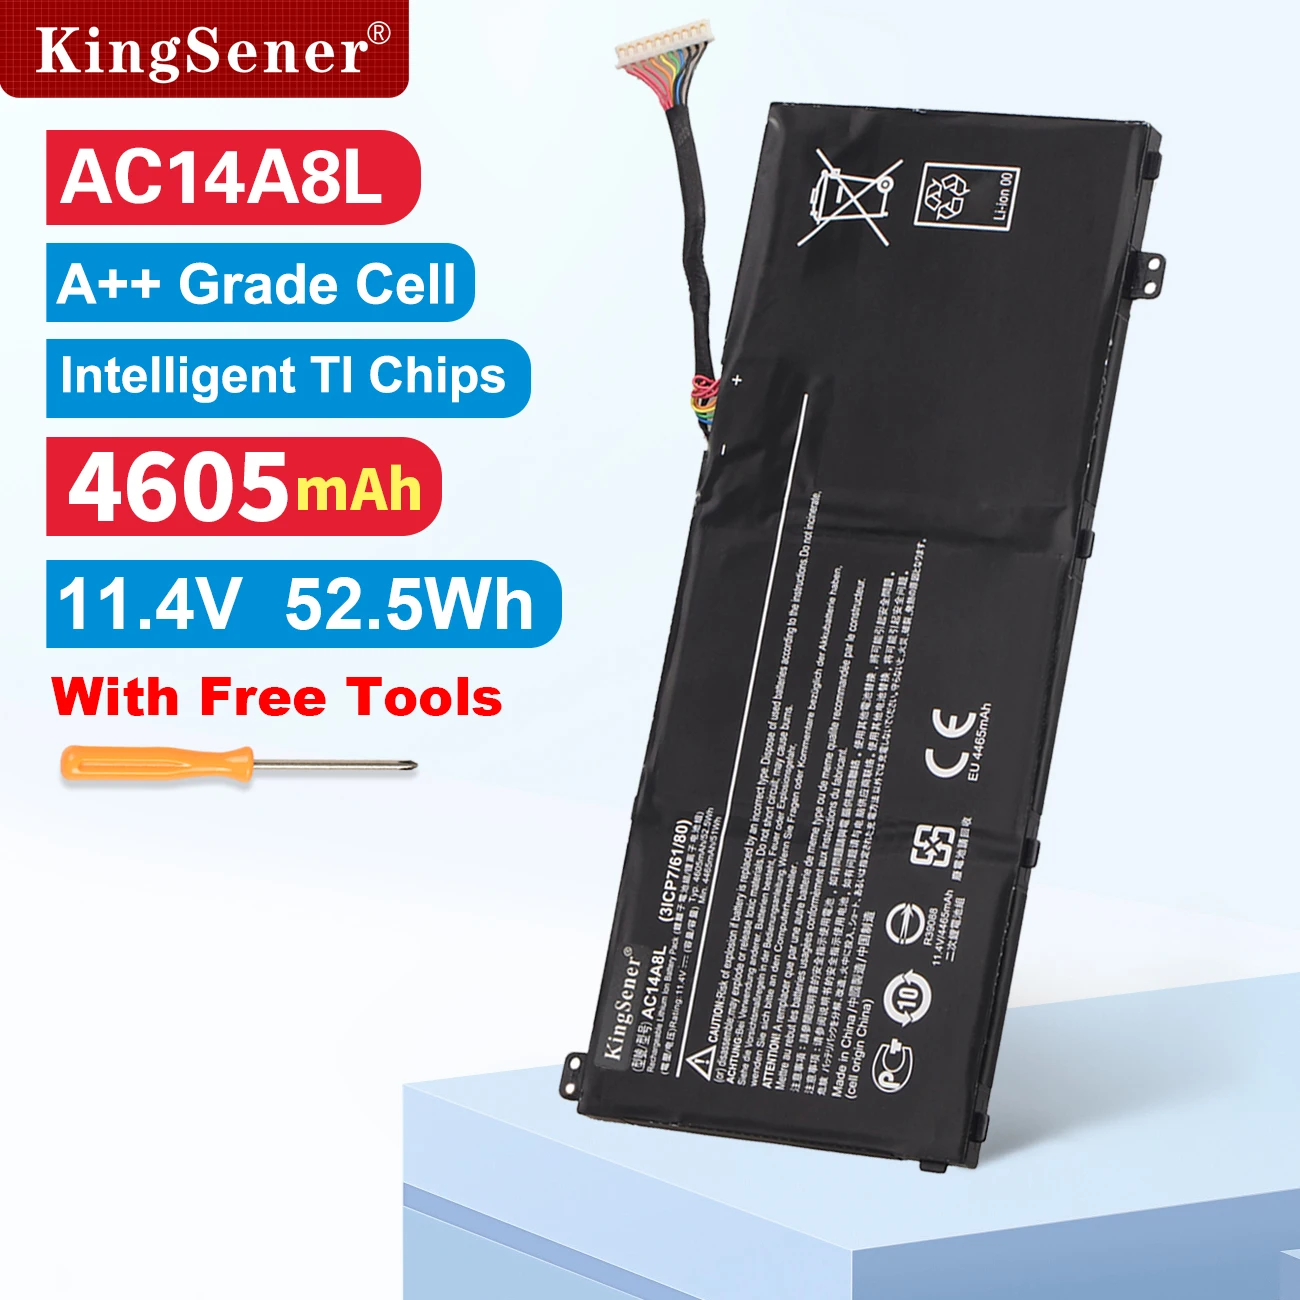 KingSener AC14A8L Laptop Battery For Acer Aspire VN7-571 VN7-571G VN7-591 VN7-591G VN7-791G MS2391 KT.0030G.001 11.4V 4605mAh-animated-img